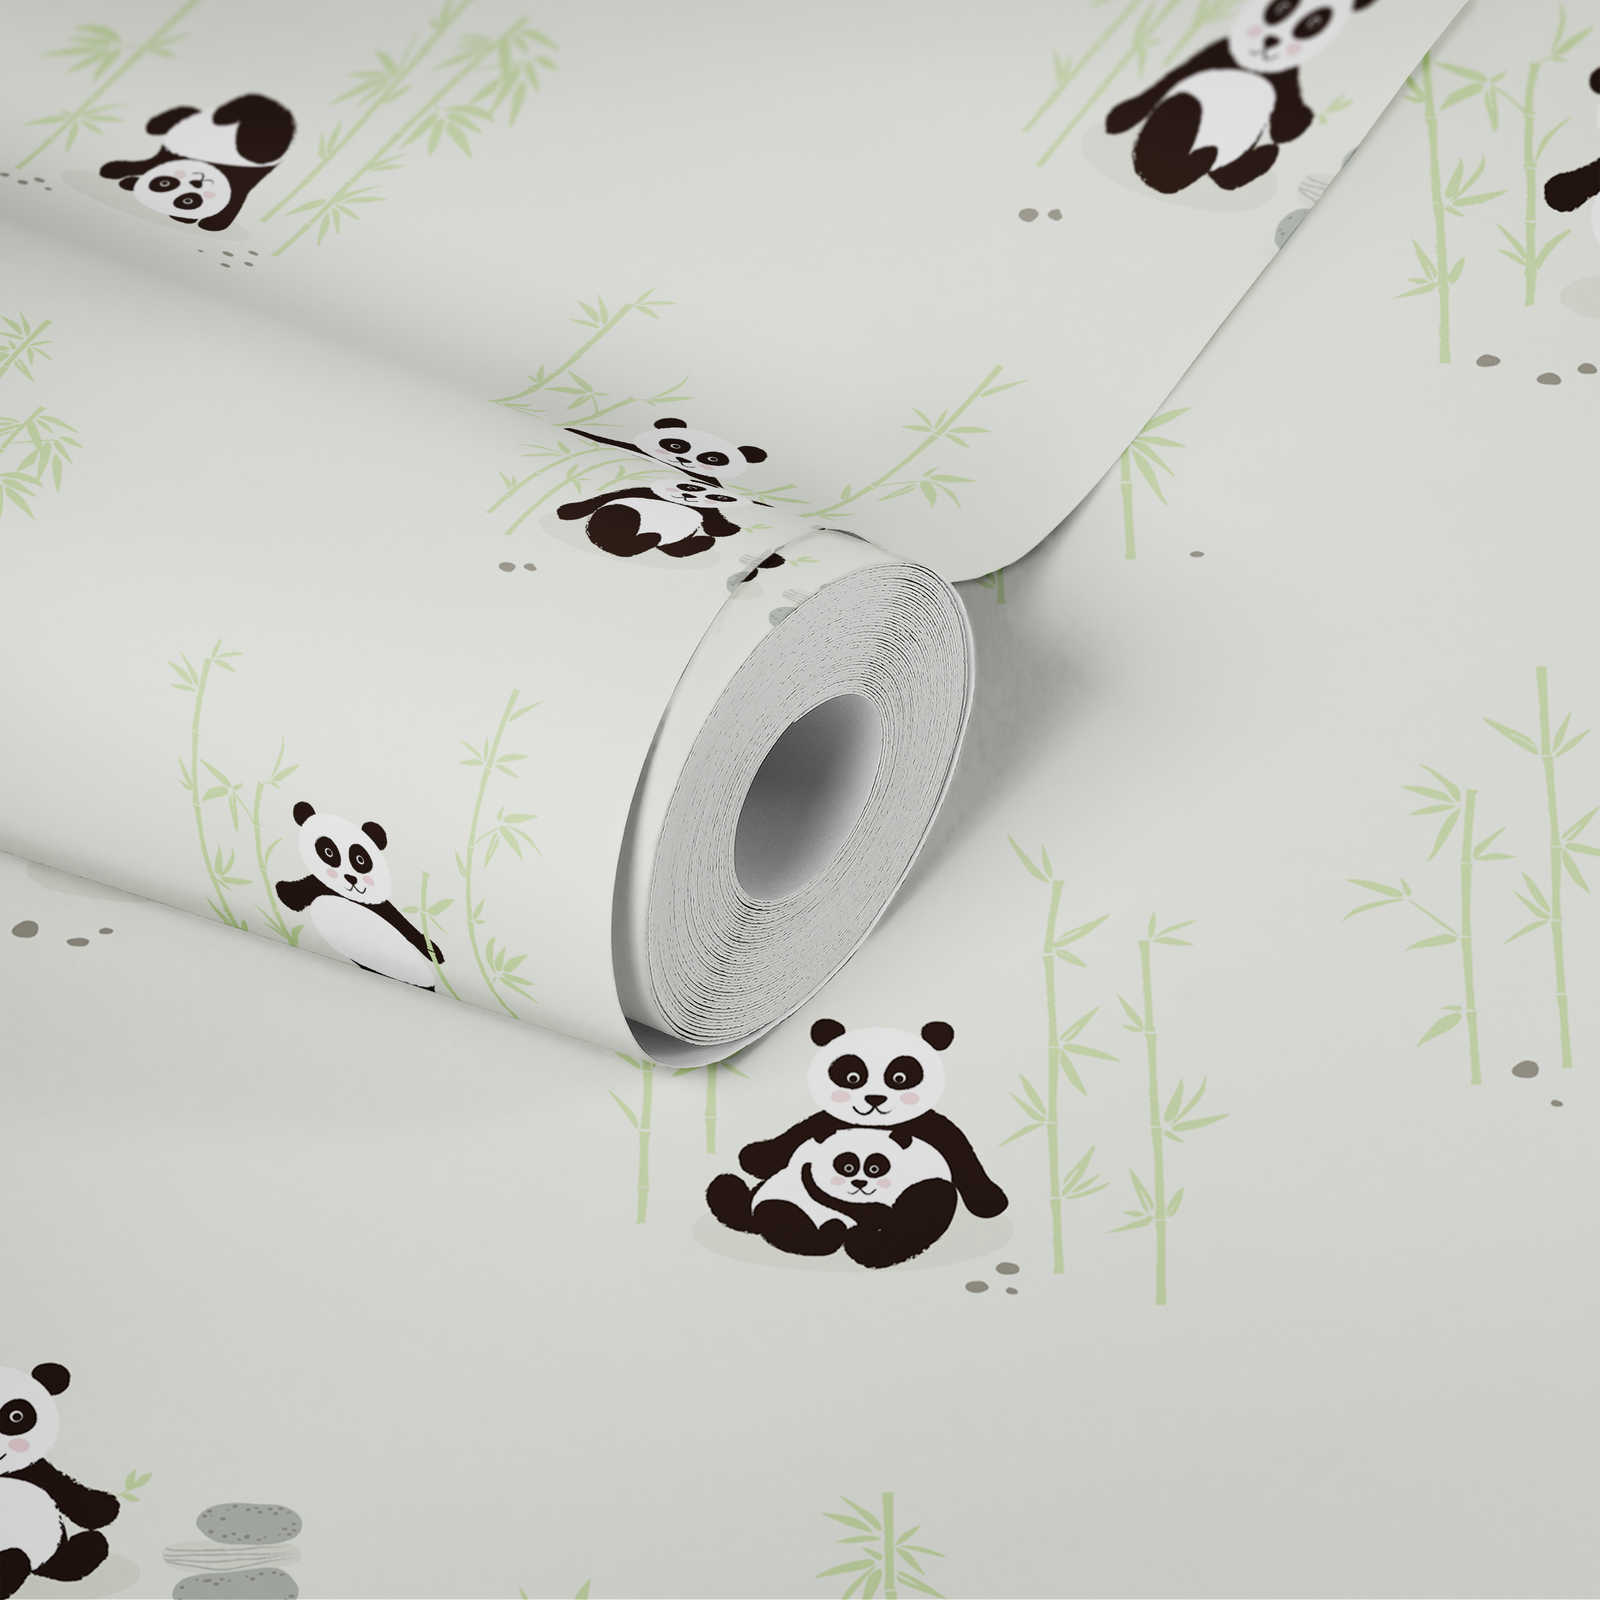             Nursery panda wallpaper - green, black, white
        